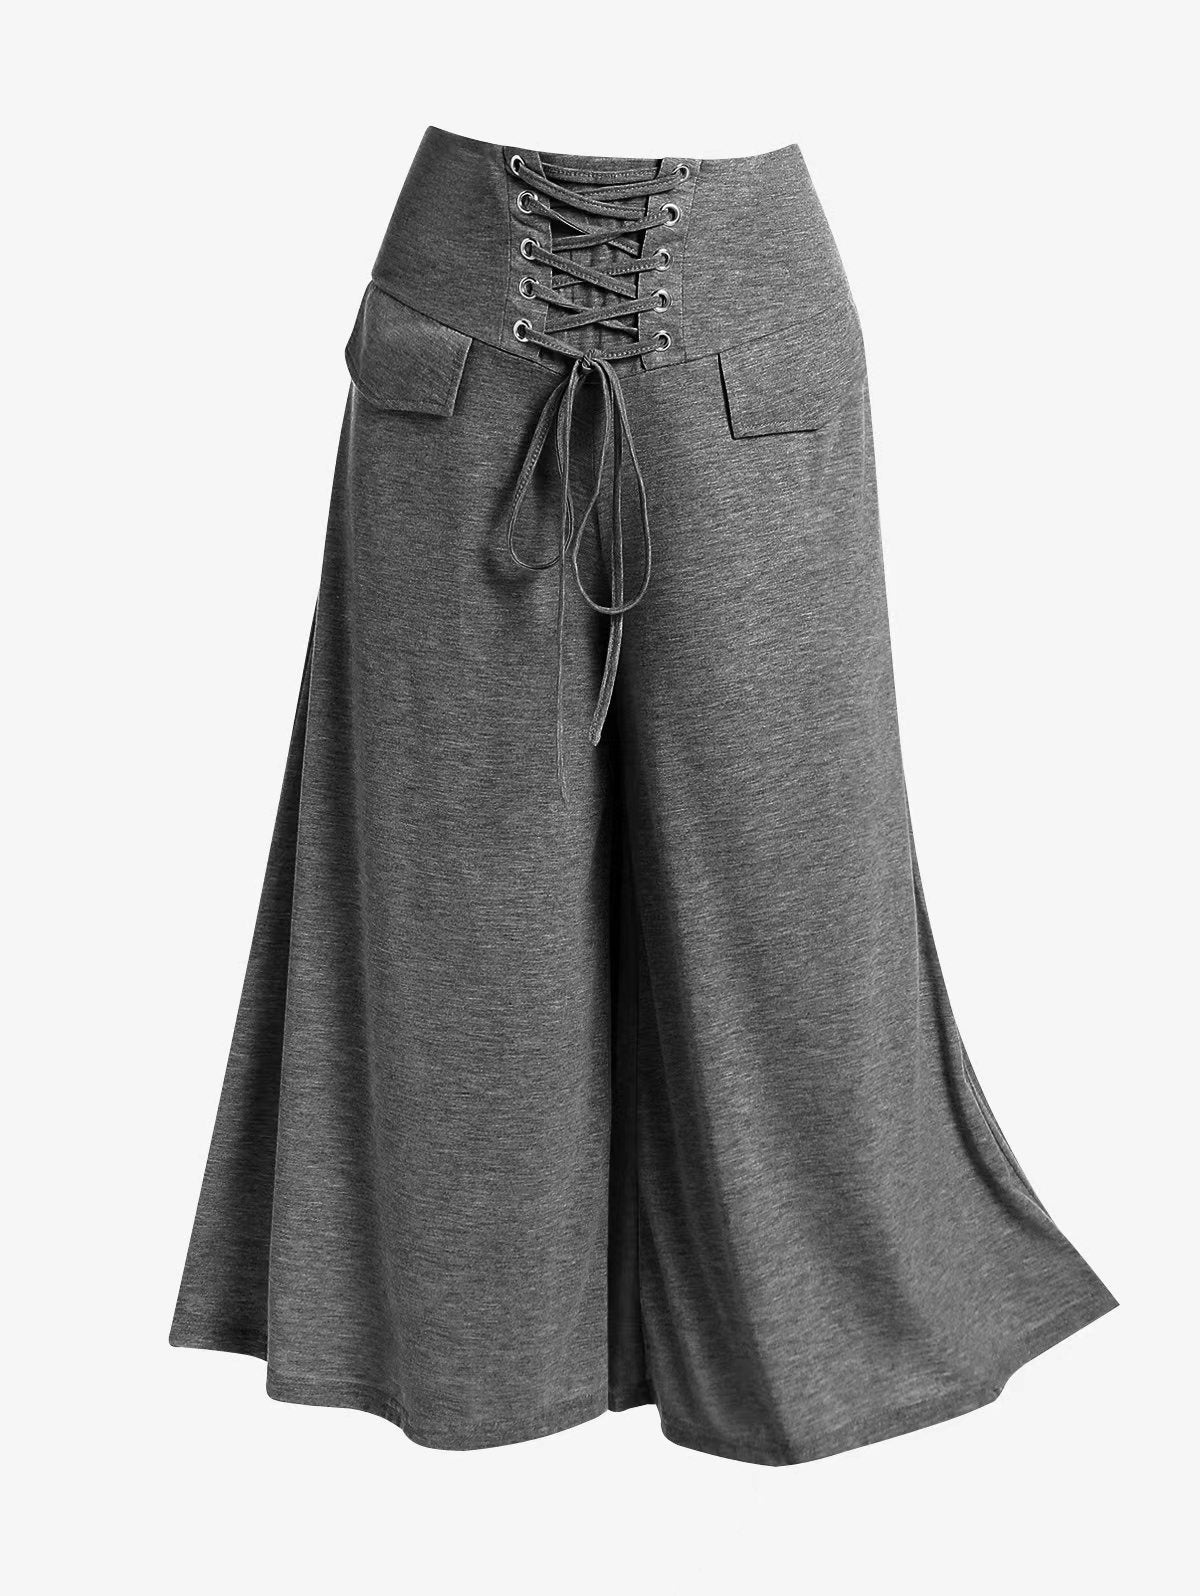 Pants  | Women's Clothing High Waist With Straps Plus Size Loose Pants | Dark Gray Melange |  2XL| thecurvestory.myshopify.com